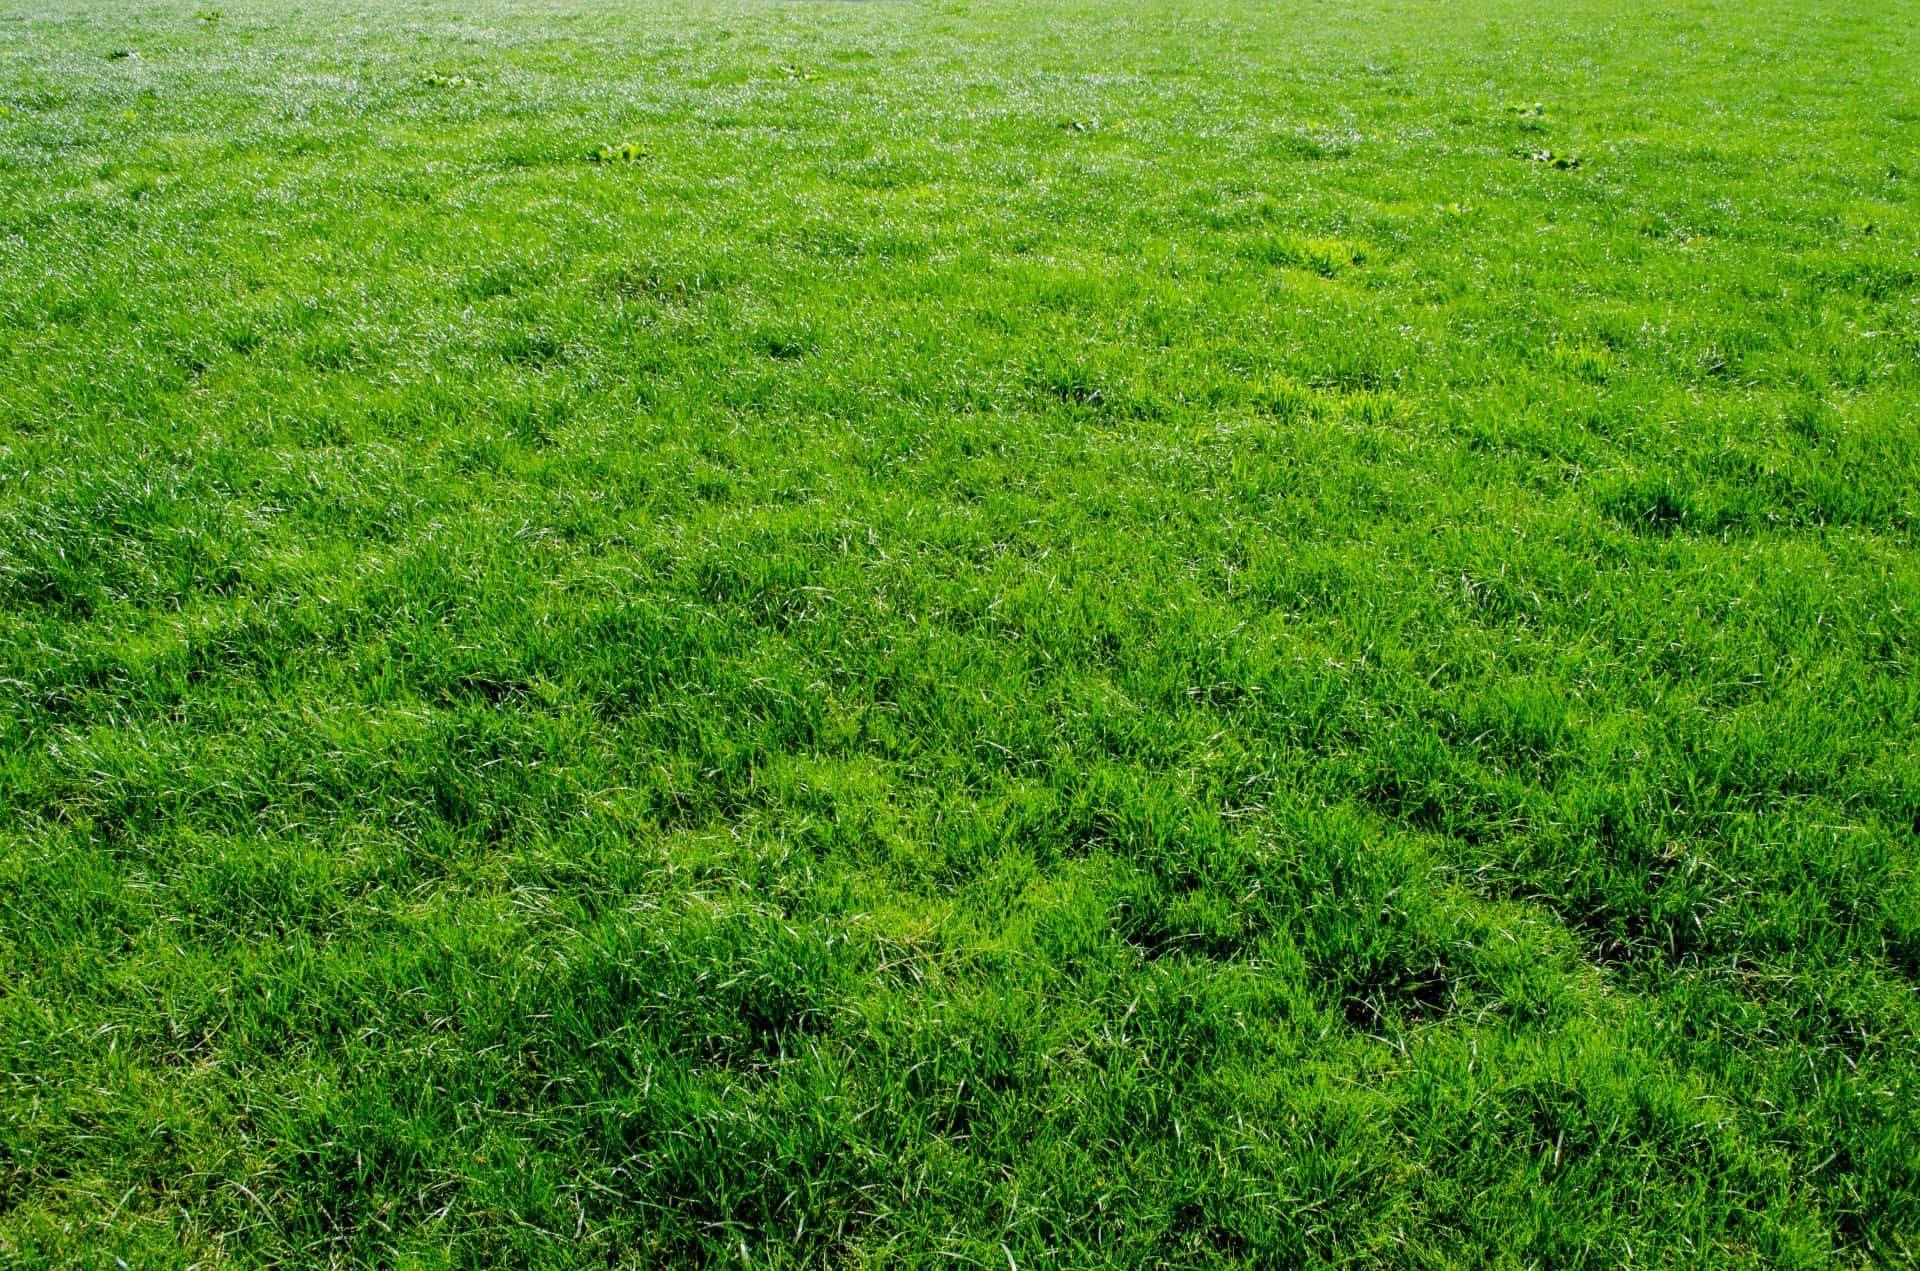 Stadium Green Grass Field Picture